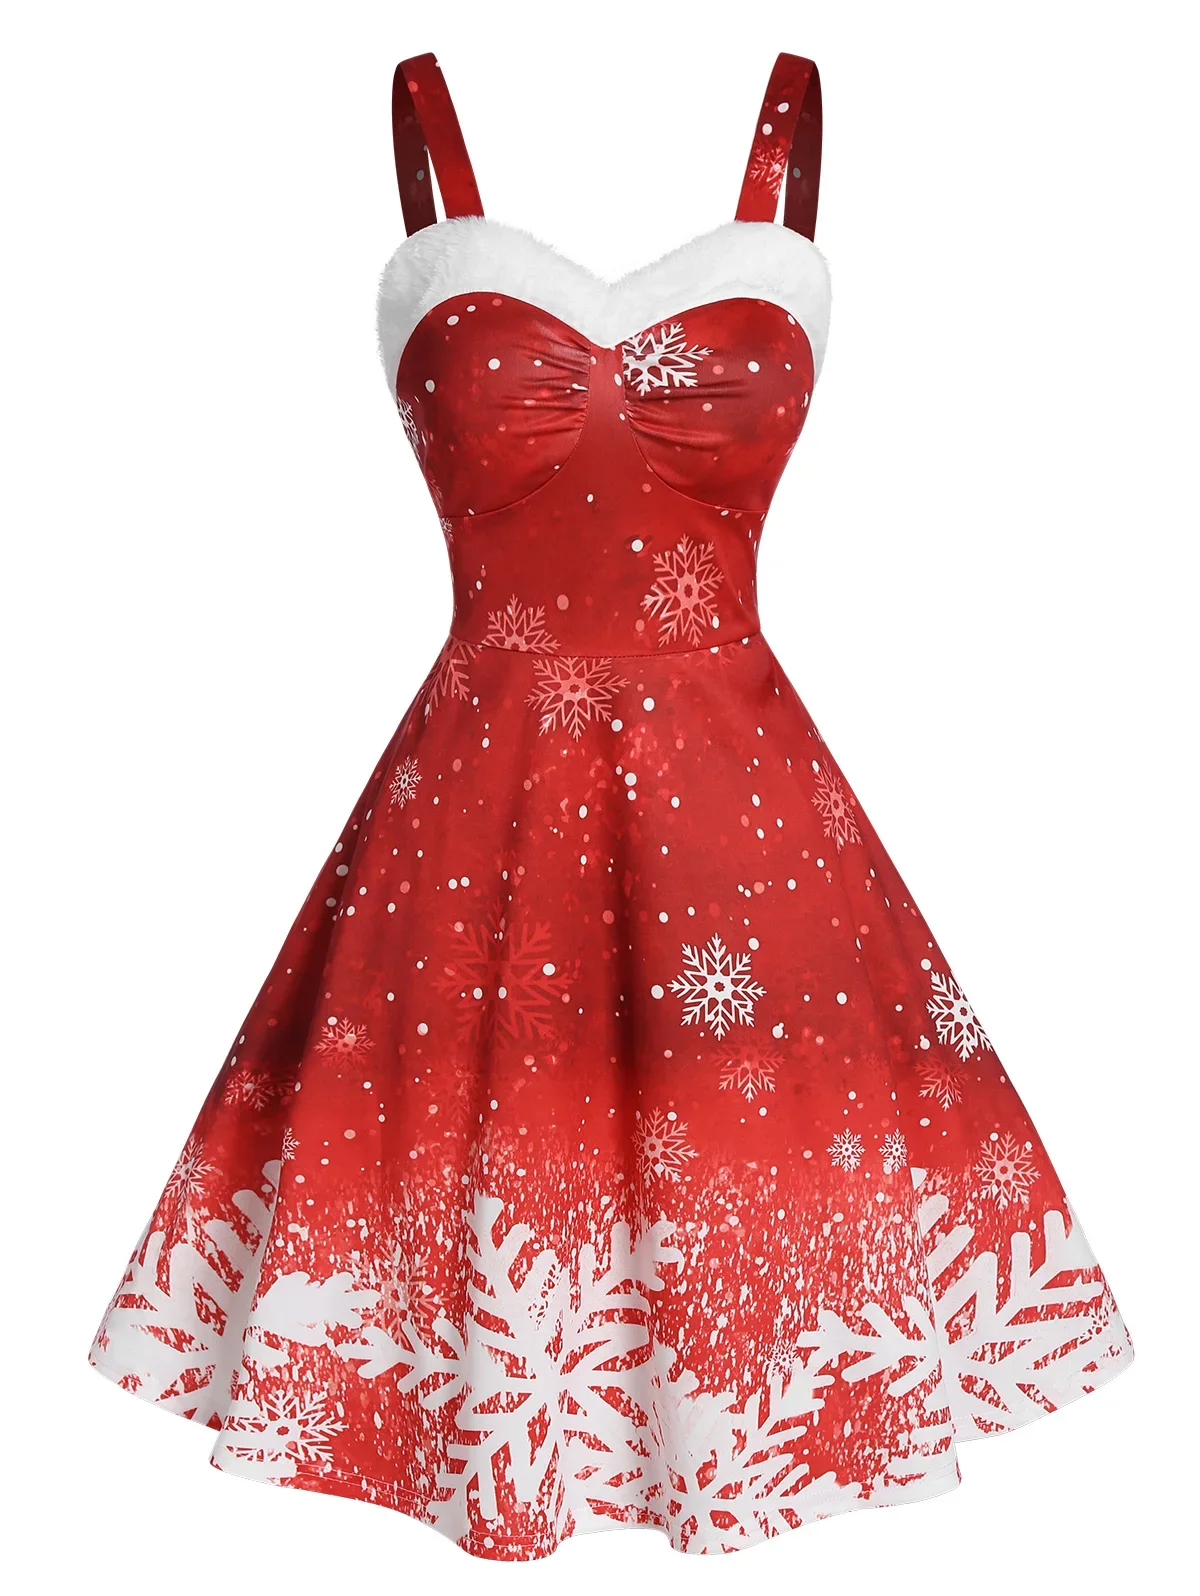 

S-3xl For Women Vintage Christmas Dresses Ombre Color Snowflake Print Off Shoulder Party Dress Женское Платье